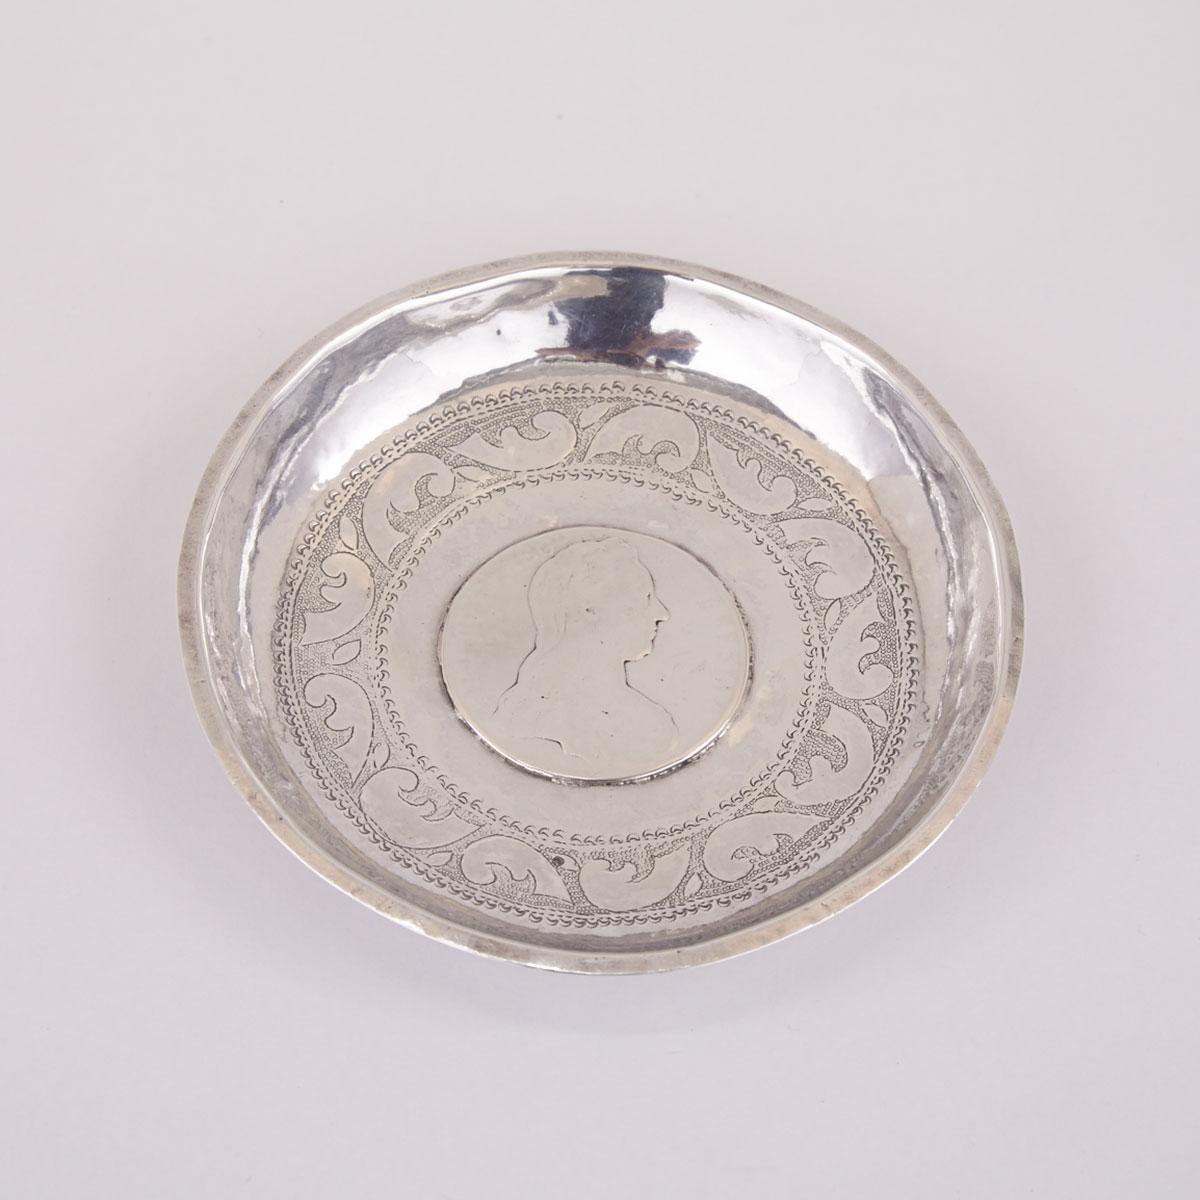 Continental Silver Small Circular Dish, 19th century